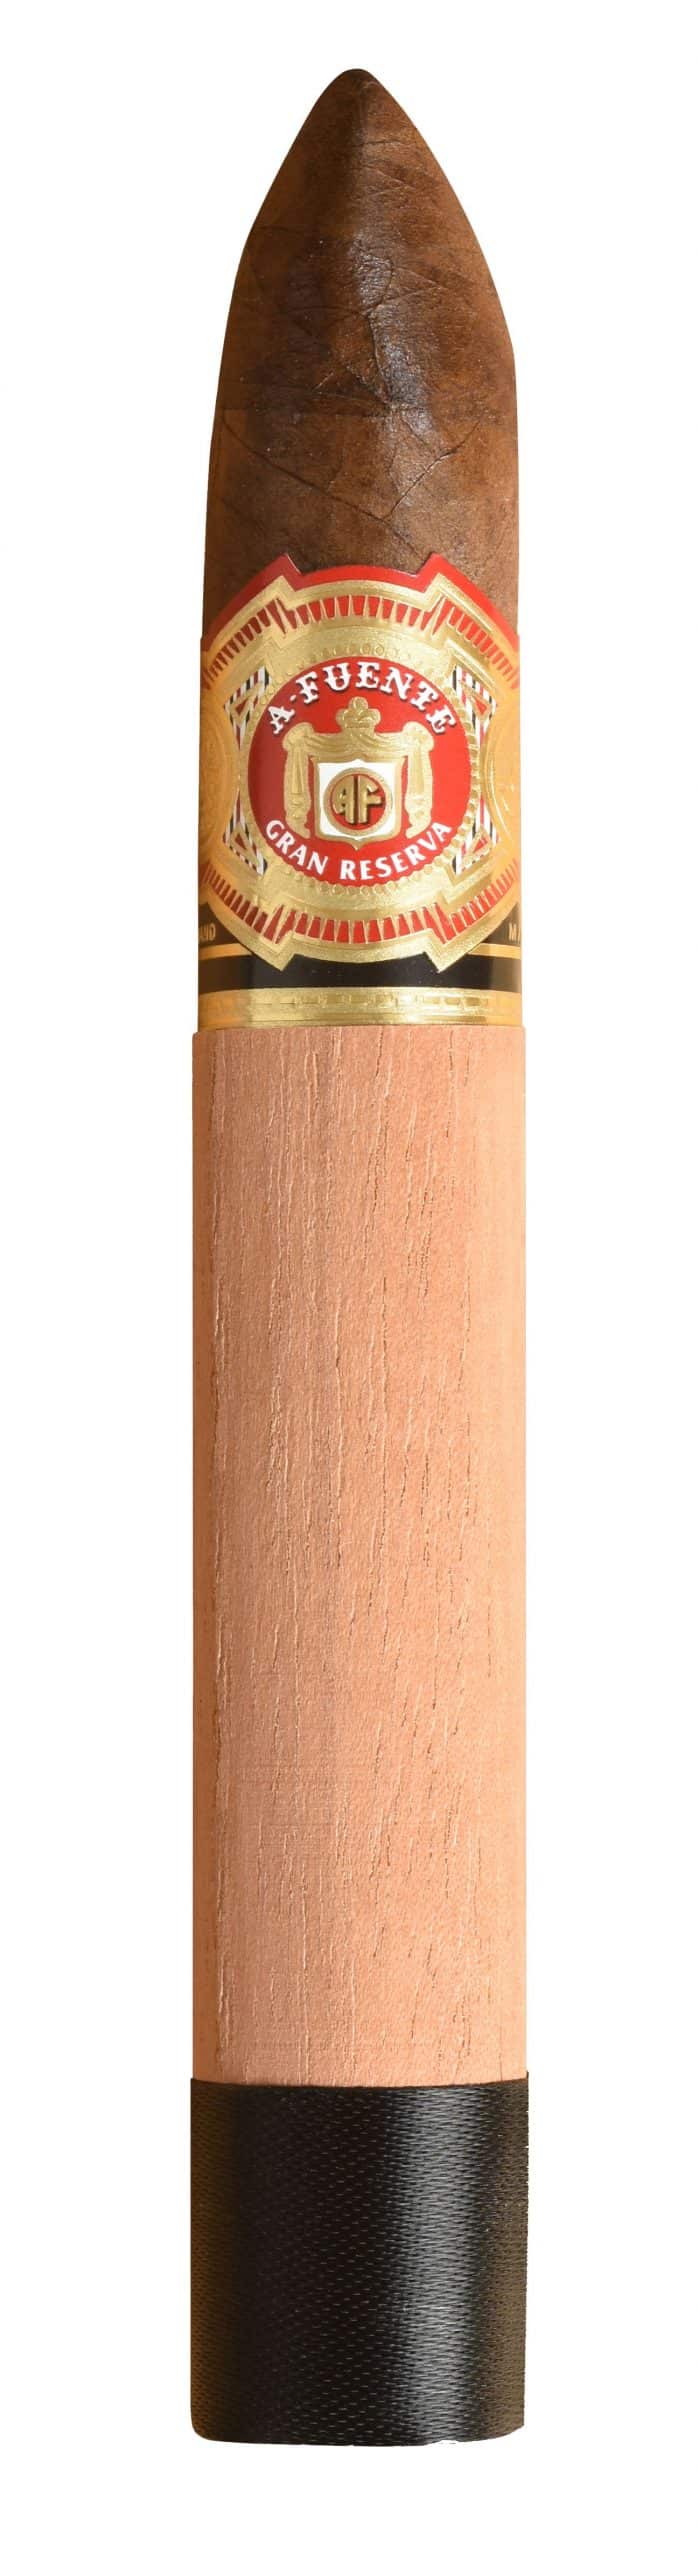 Single Arturo Fuente Chateau Cuban Belicoso Sungrown cigar